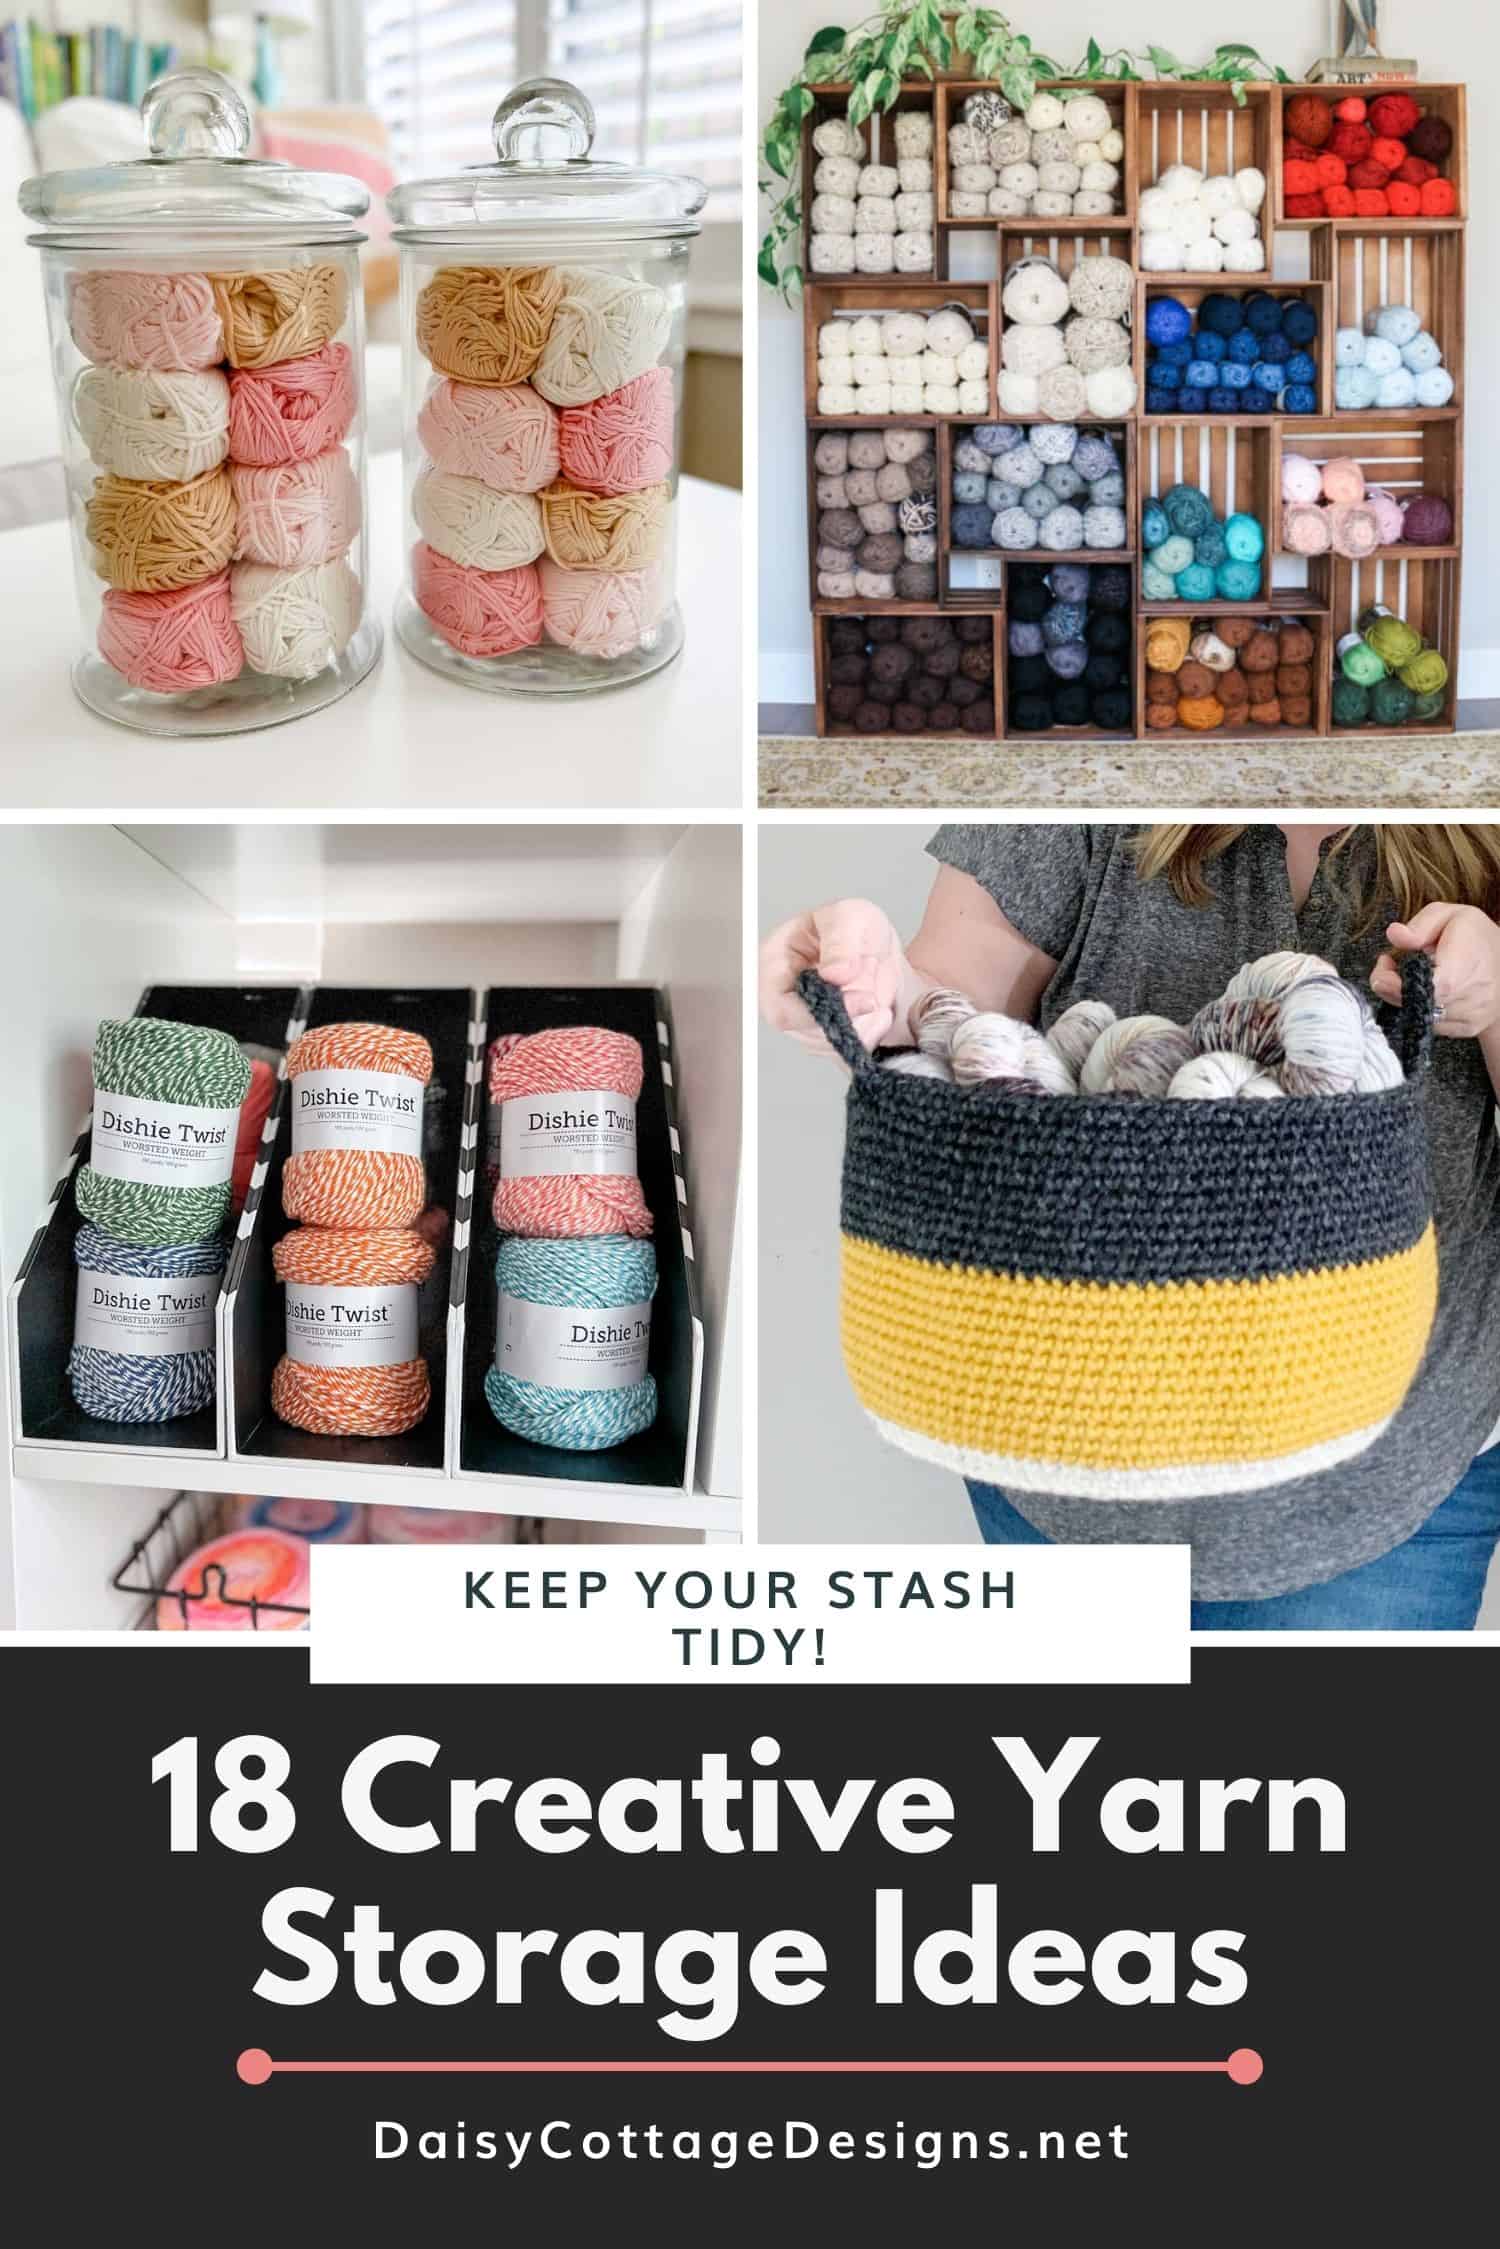 Yarn storage hacks – 7 top tips - Gathered